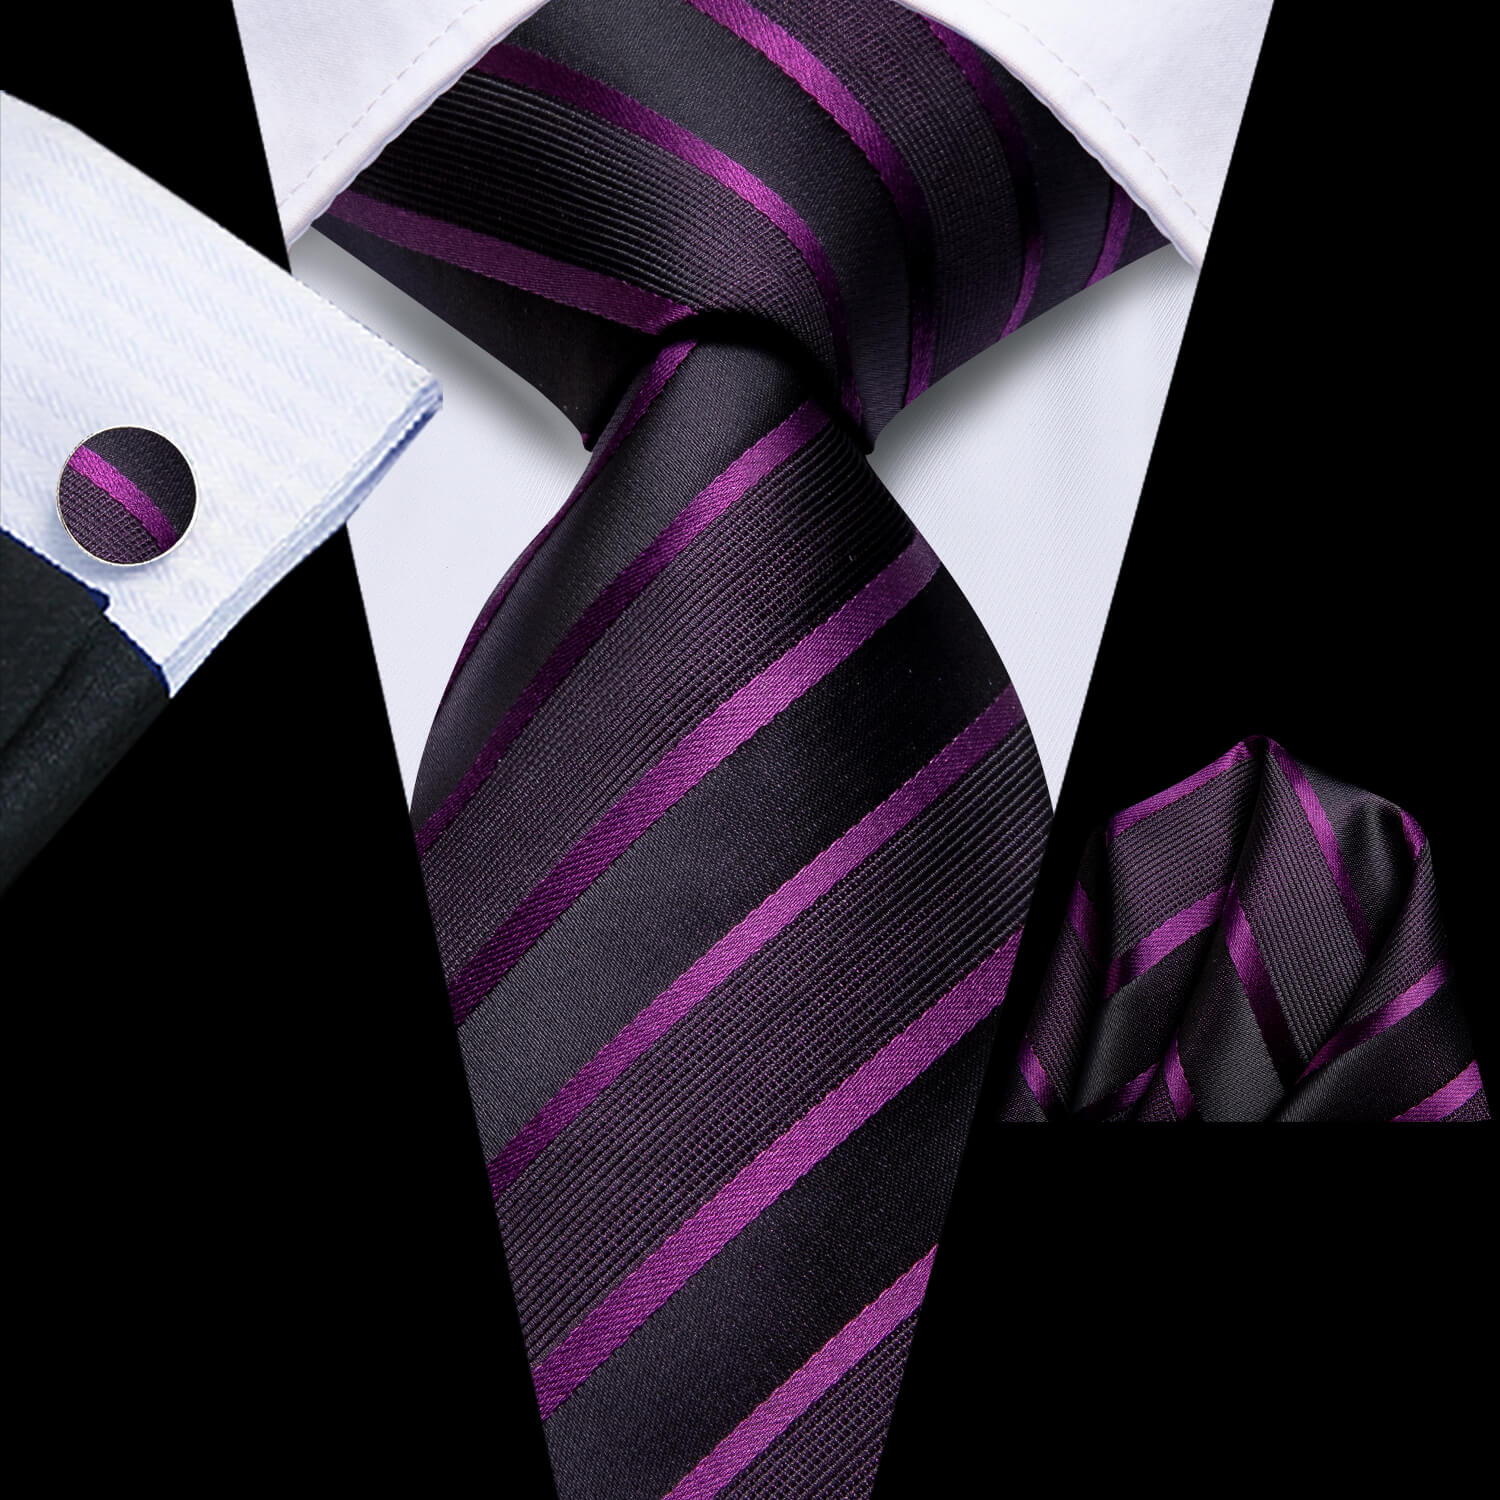 Hi-Tie Striped Tie Silk Purple Black  Tie Handkerchief Cufflinks Set New Arrival